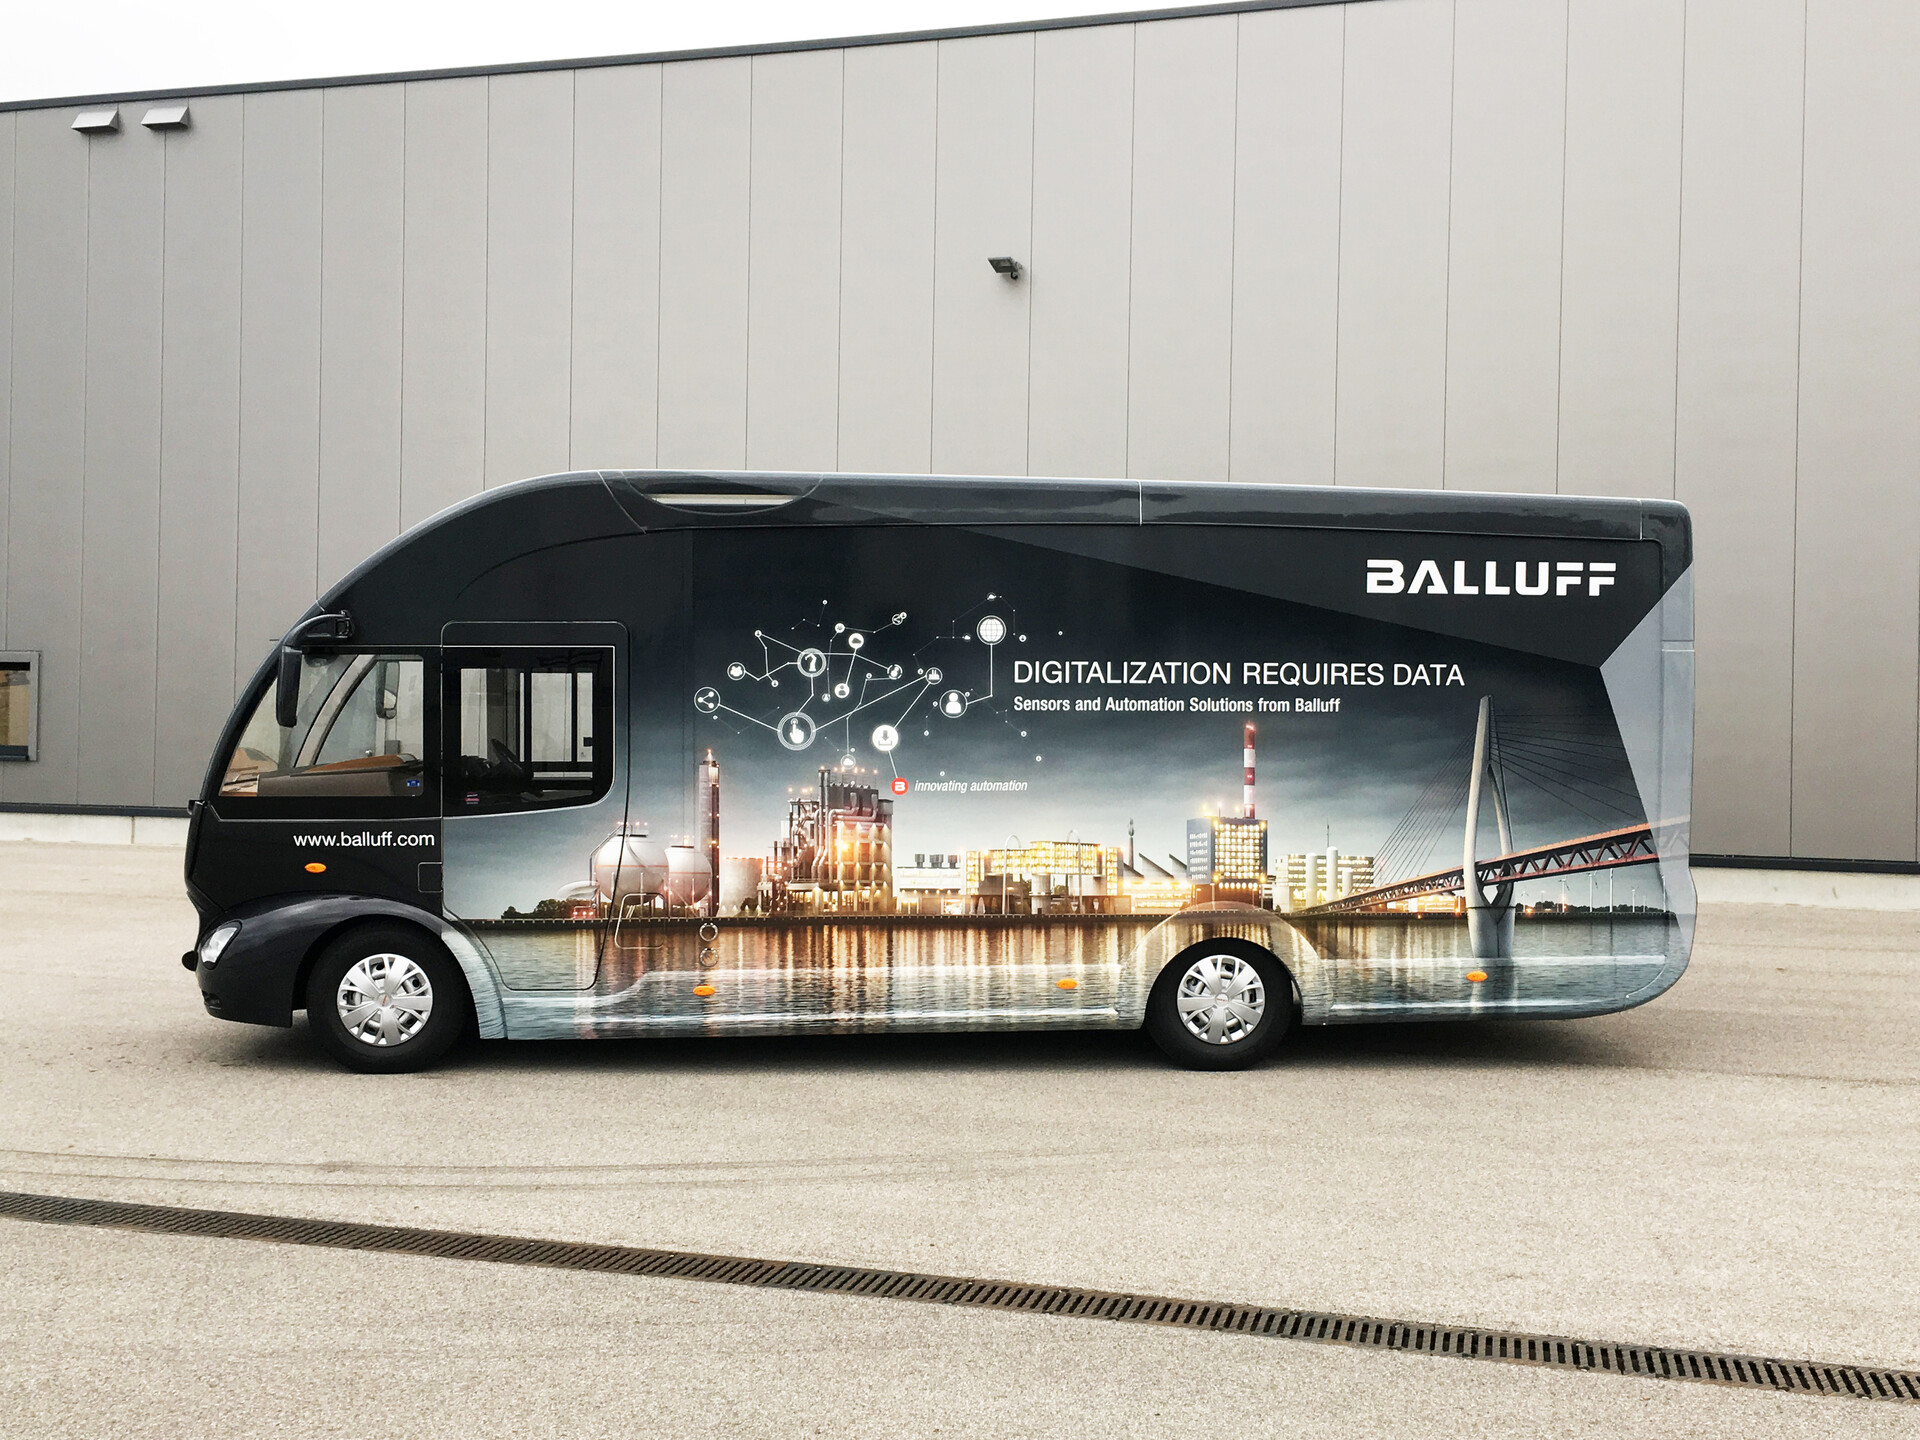 Balluff Infomobil Branding